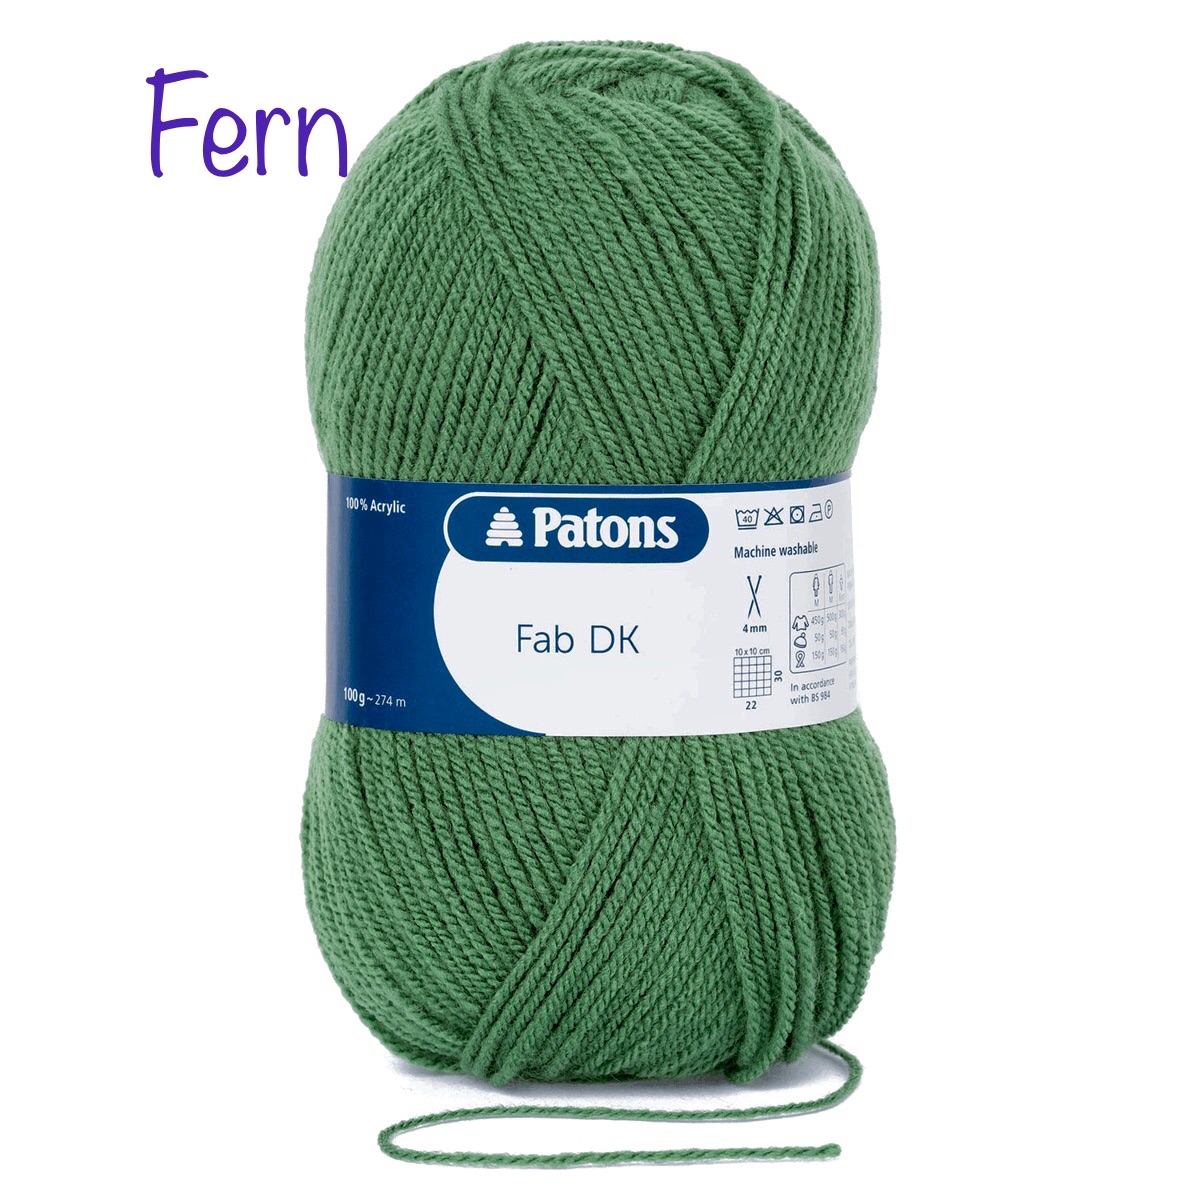 Patons fab dk fern acrylic Double knitting yarn